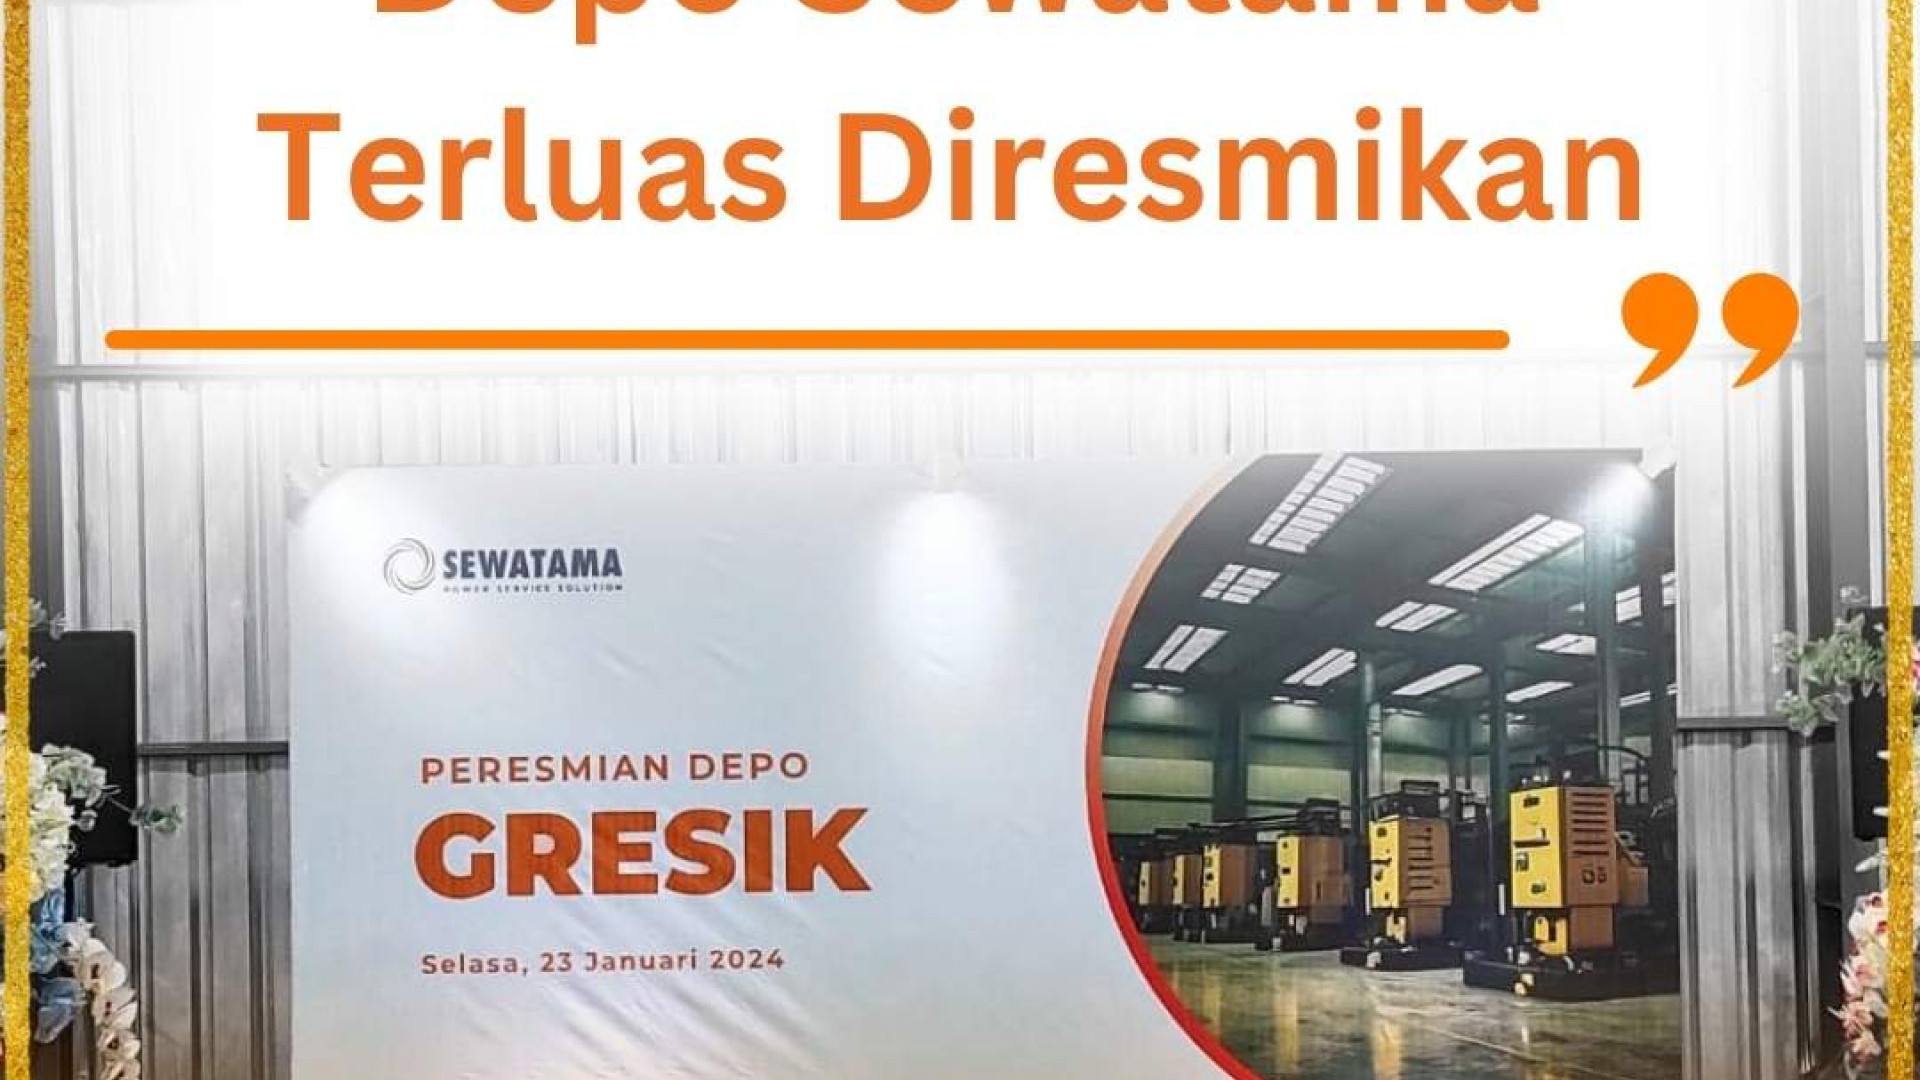 Inauguration of the Gresik Depot